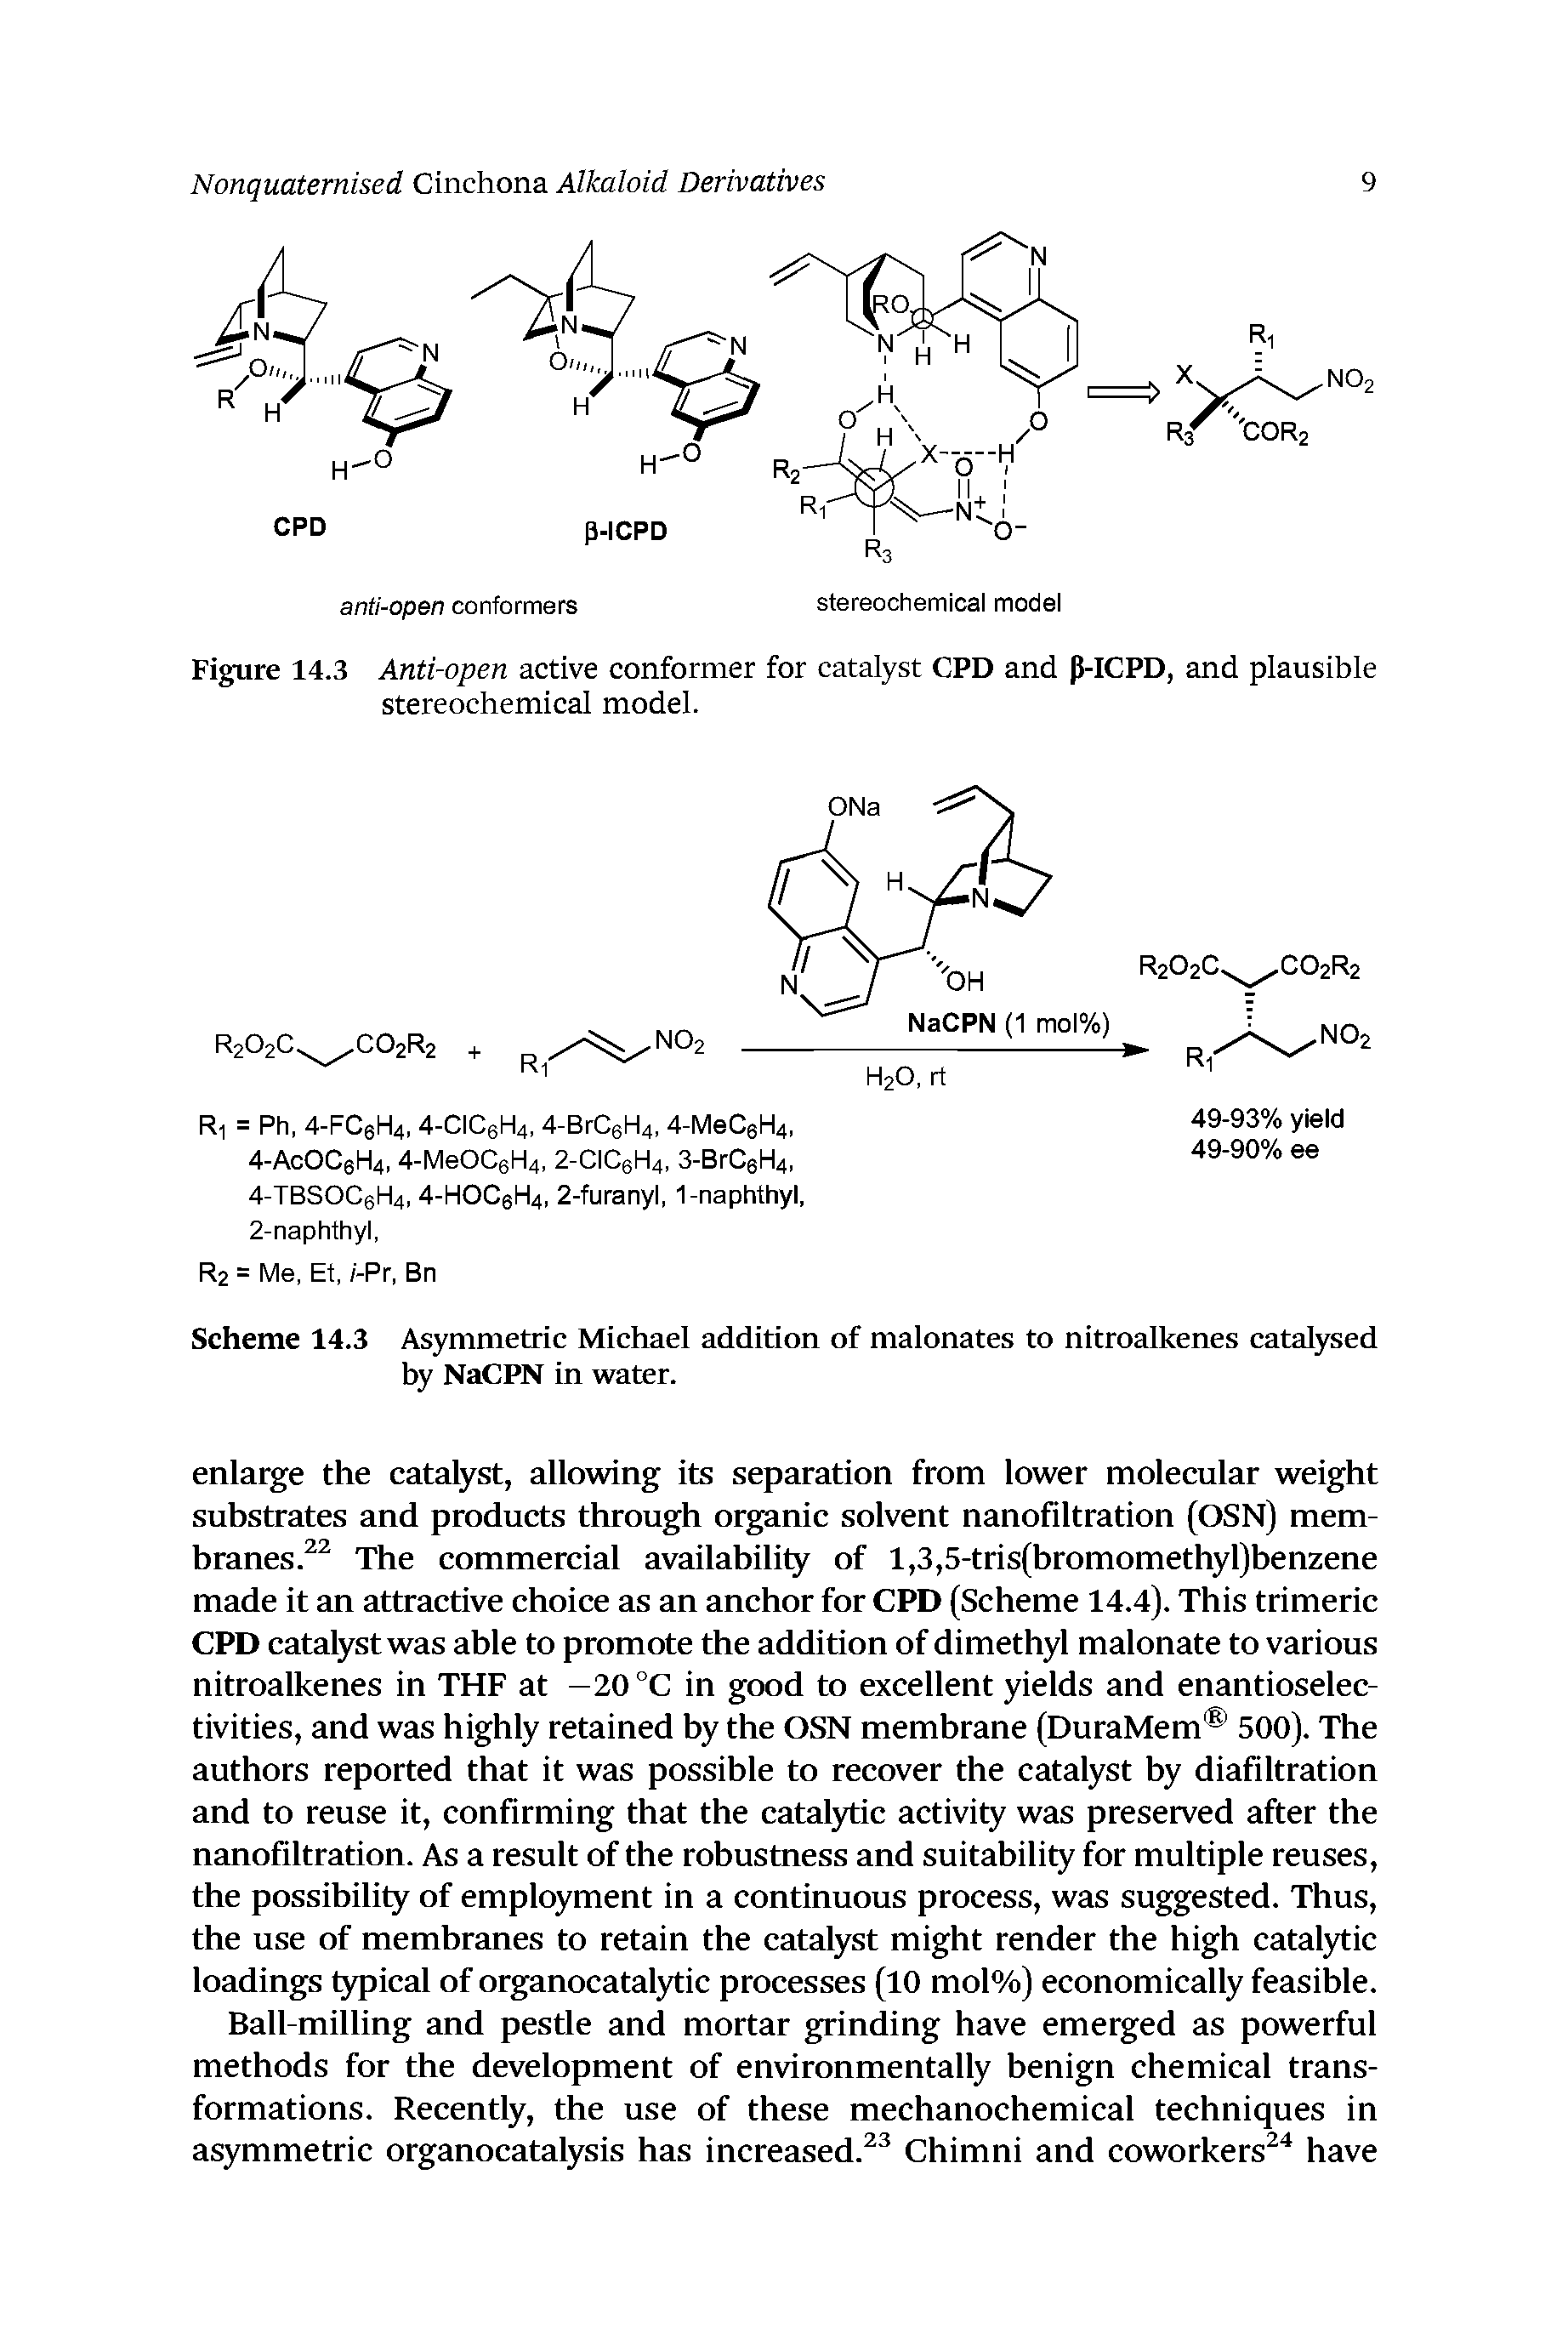 Scheme 14.3 Asymmetric Michael addition of malonates to nitroalkenes catatysed by NaCPN in water.